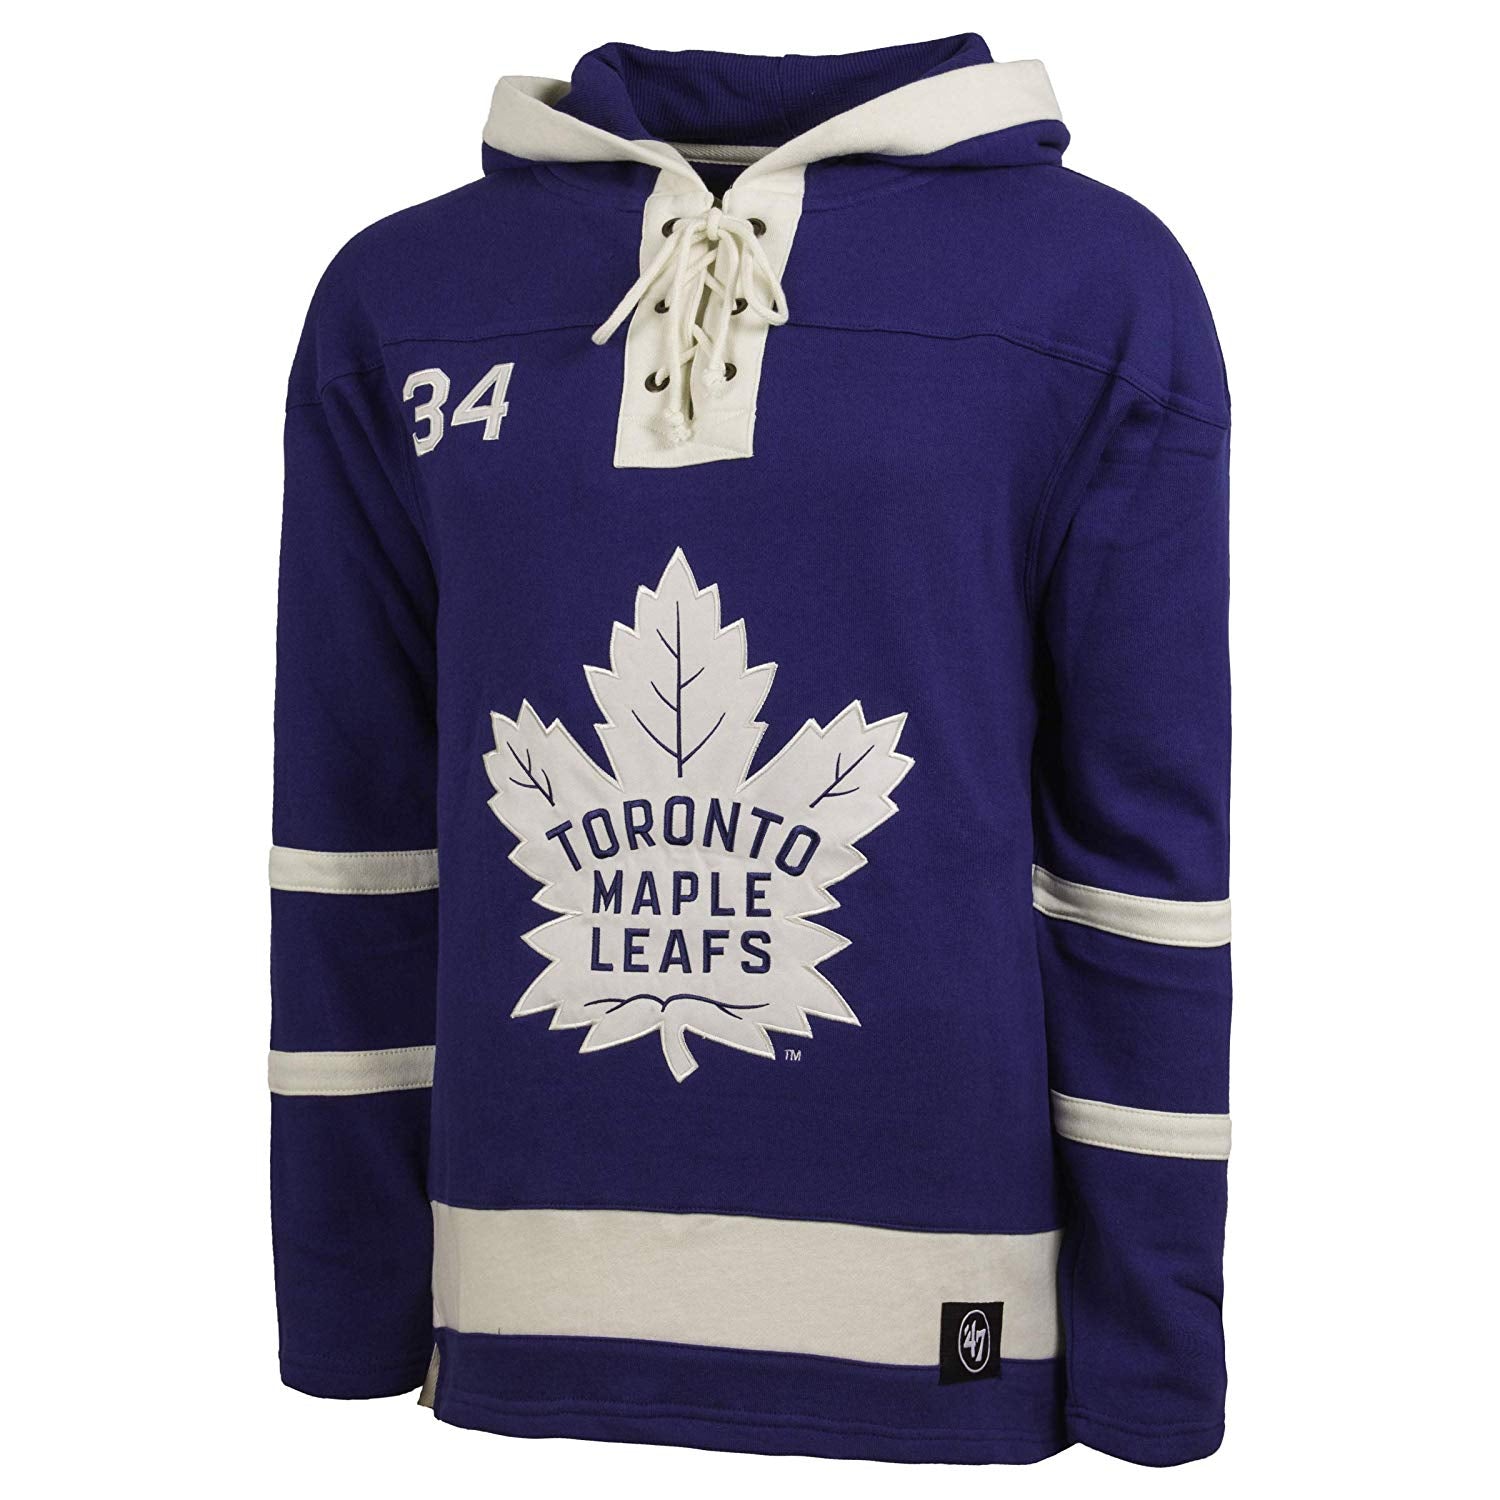 Antigua Toronto Maple Leafs Women's Grey Axe Bunker Hooded Sweatshirt, Grey, 86% Cotton / 11% Polyester / 3% SPANDEX, Size 2XL, Rally House